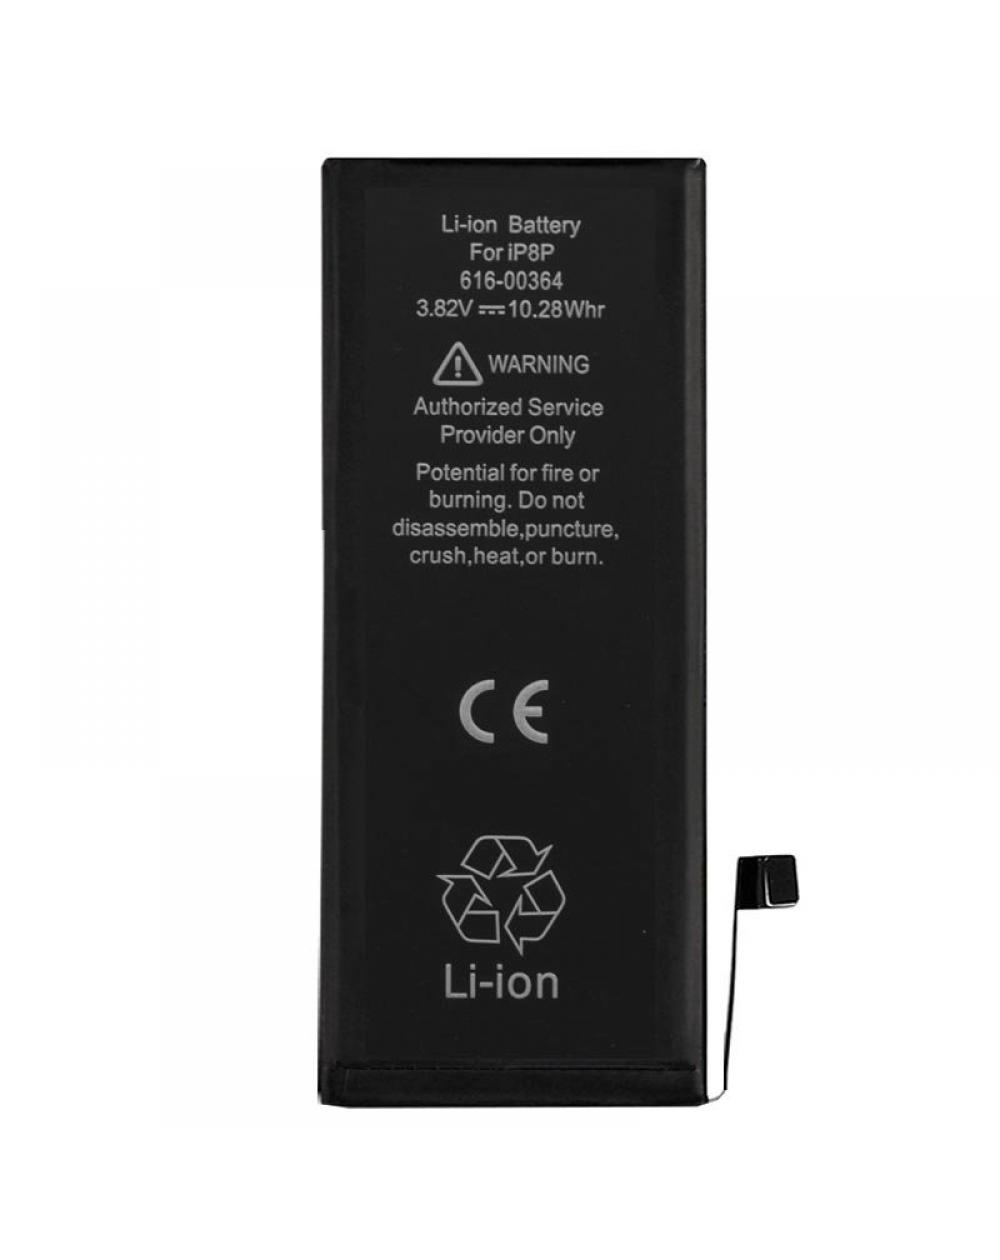 Bateria COOL Compatible para iPhone 8 Plus - Imagen 1